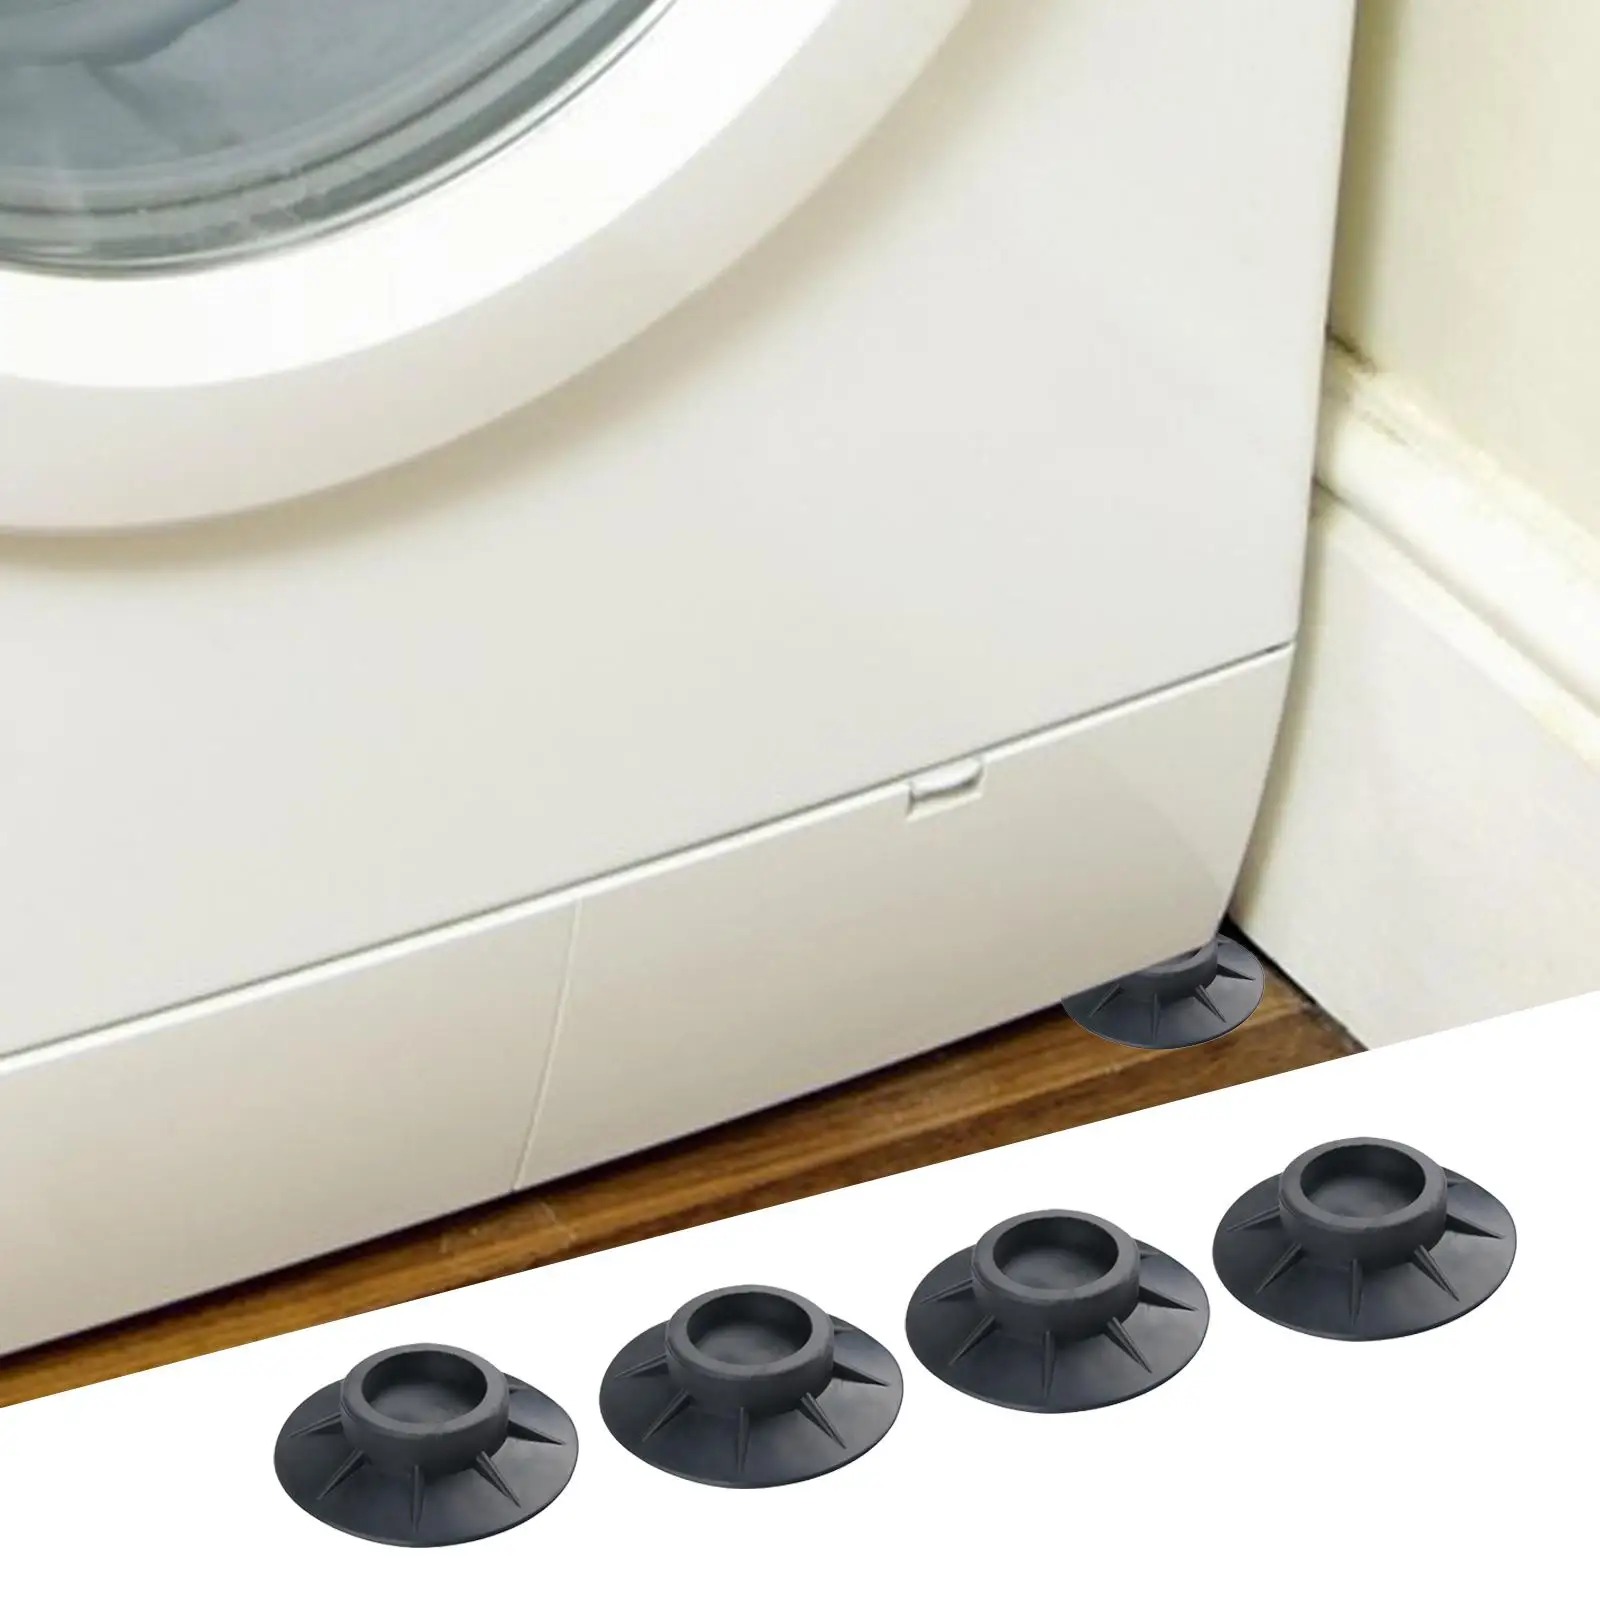 Washing Machine Feet Noise Dampening Universal Anitivibration Pad for Refrigerator